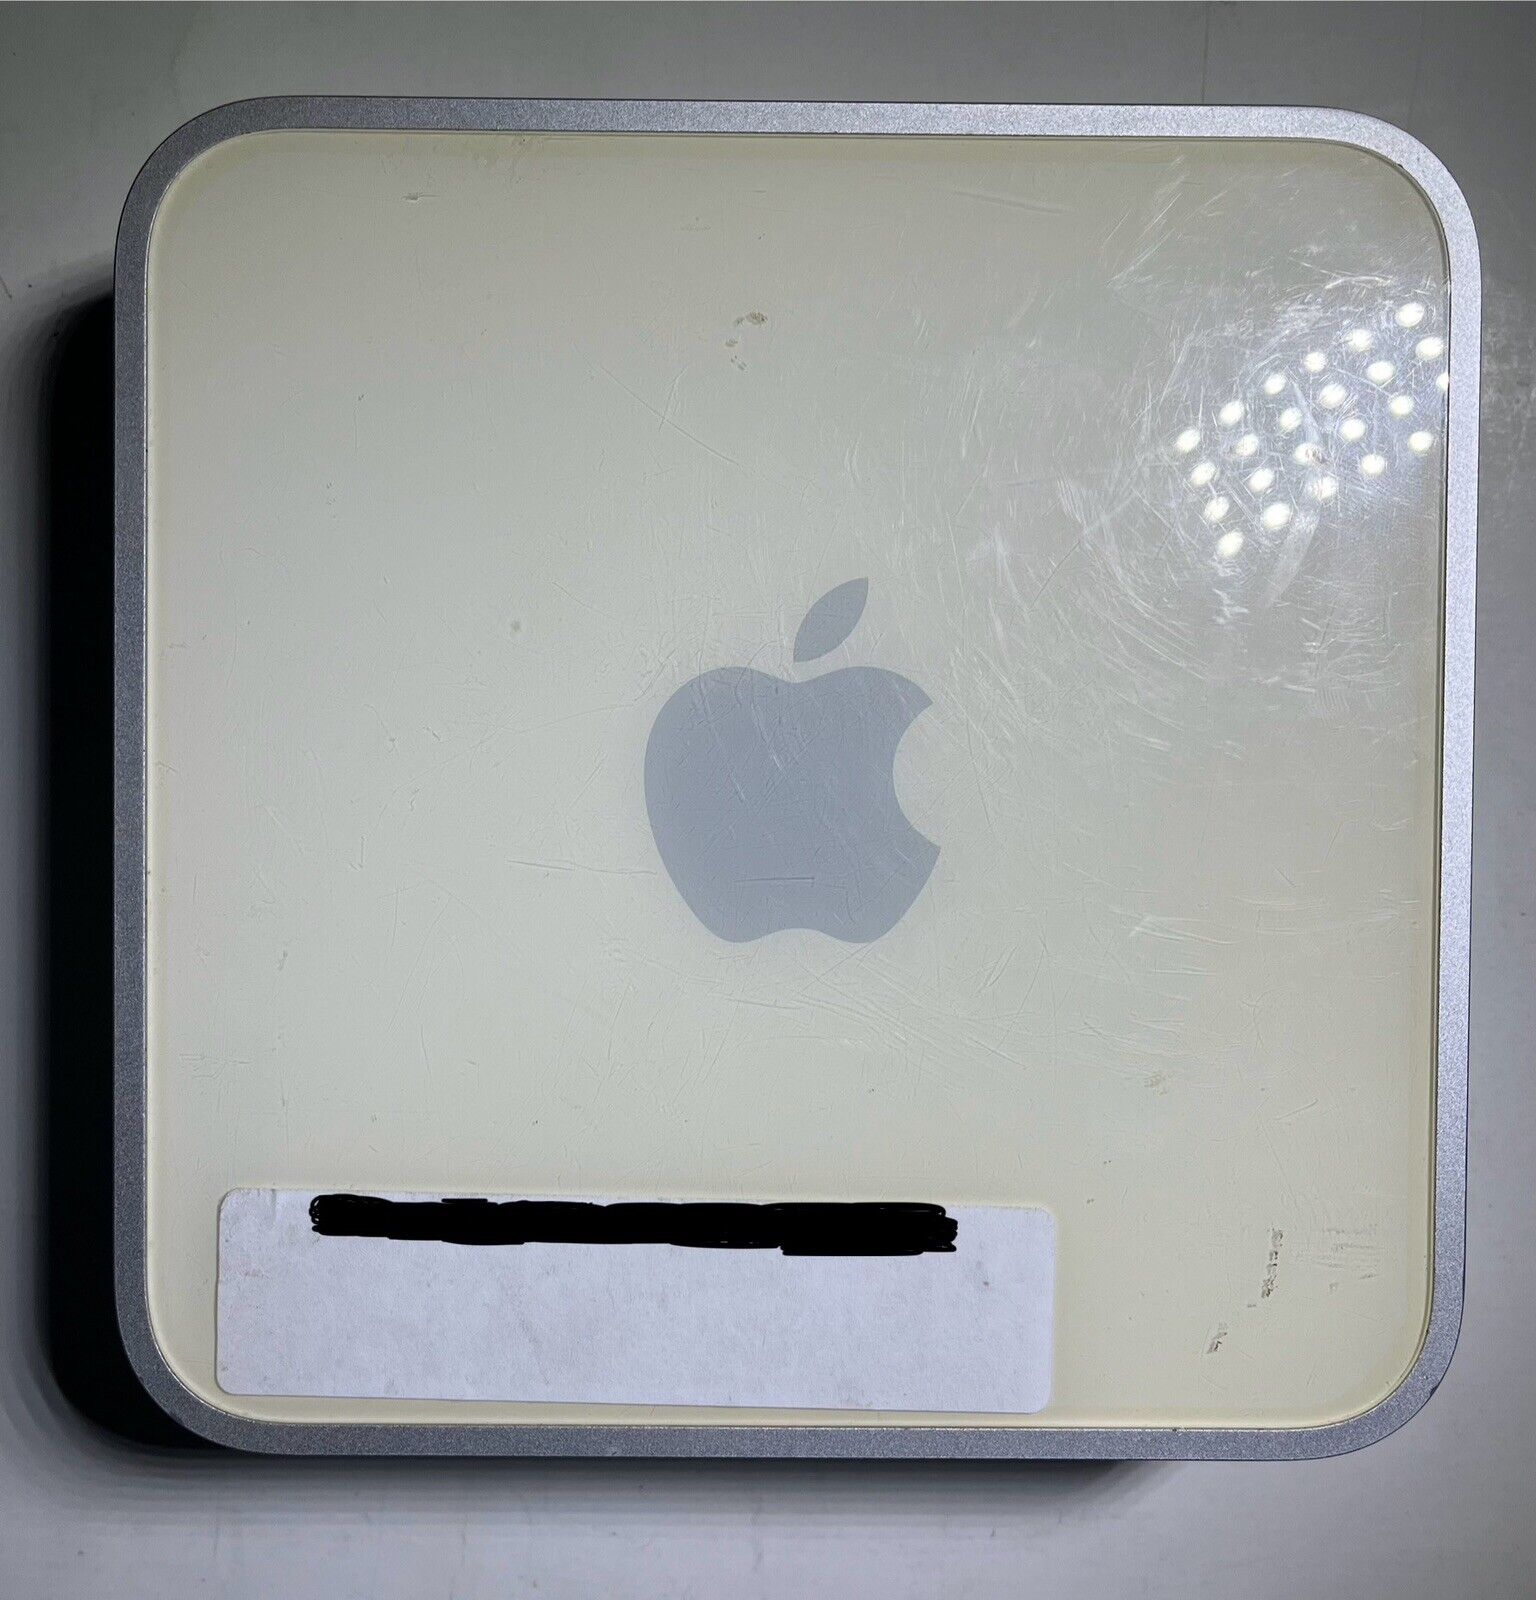 Vintage Apple Mac Mini G4 *Read Description*